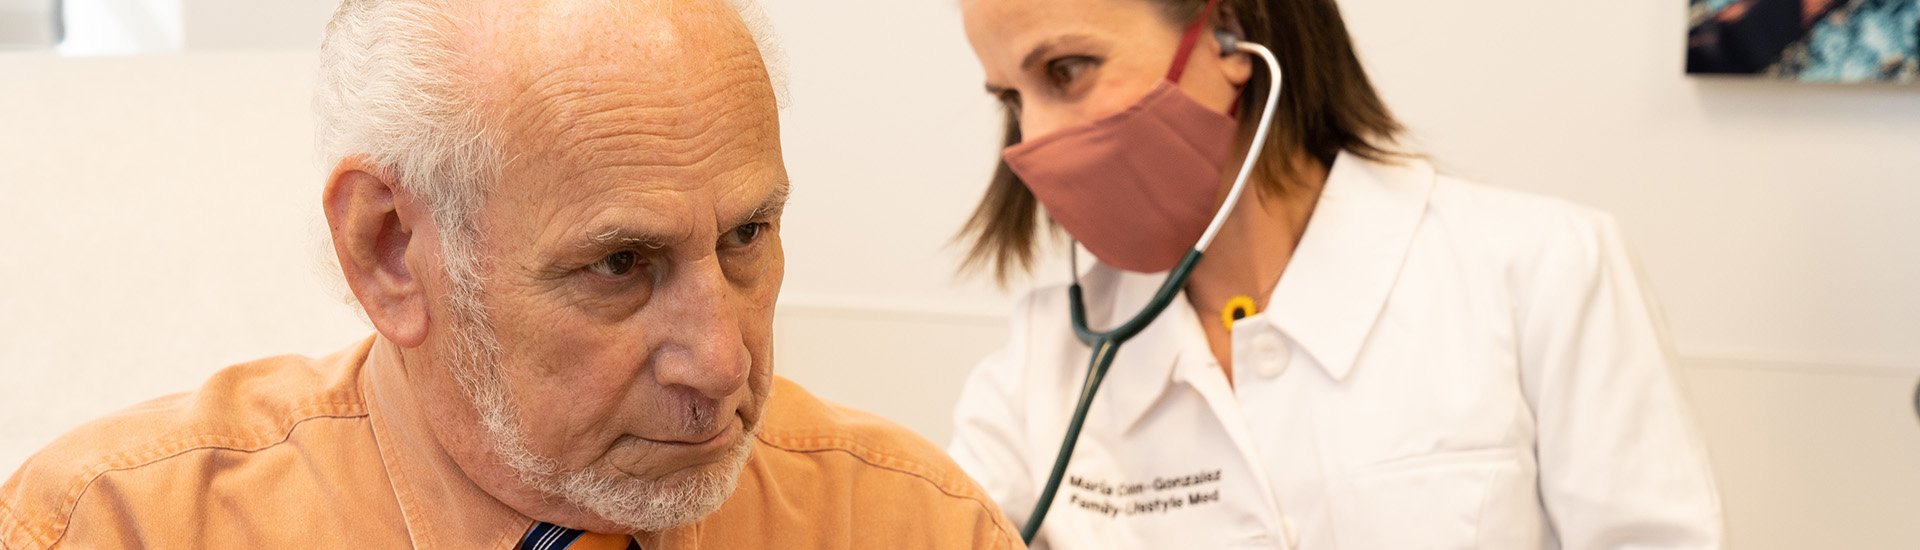 doctor-with-older-man-patient-exam